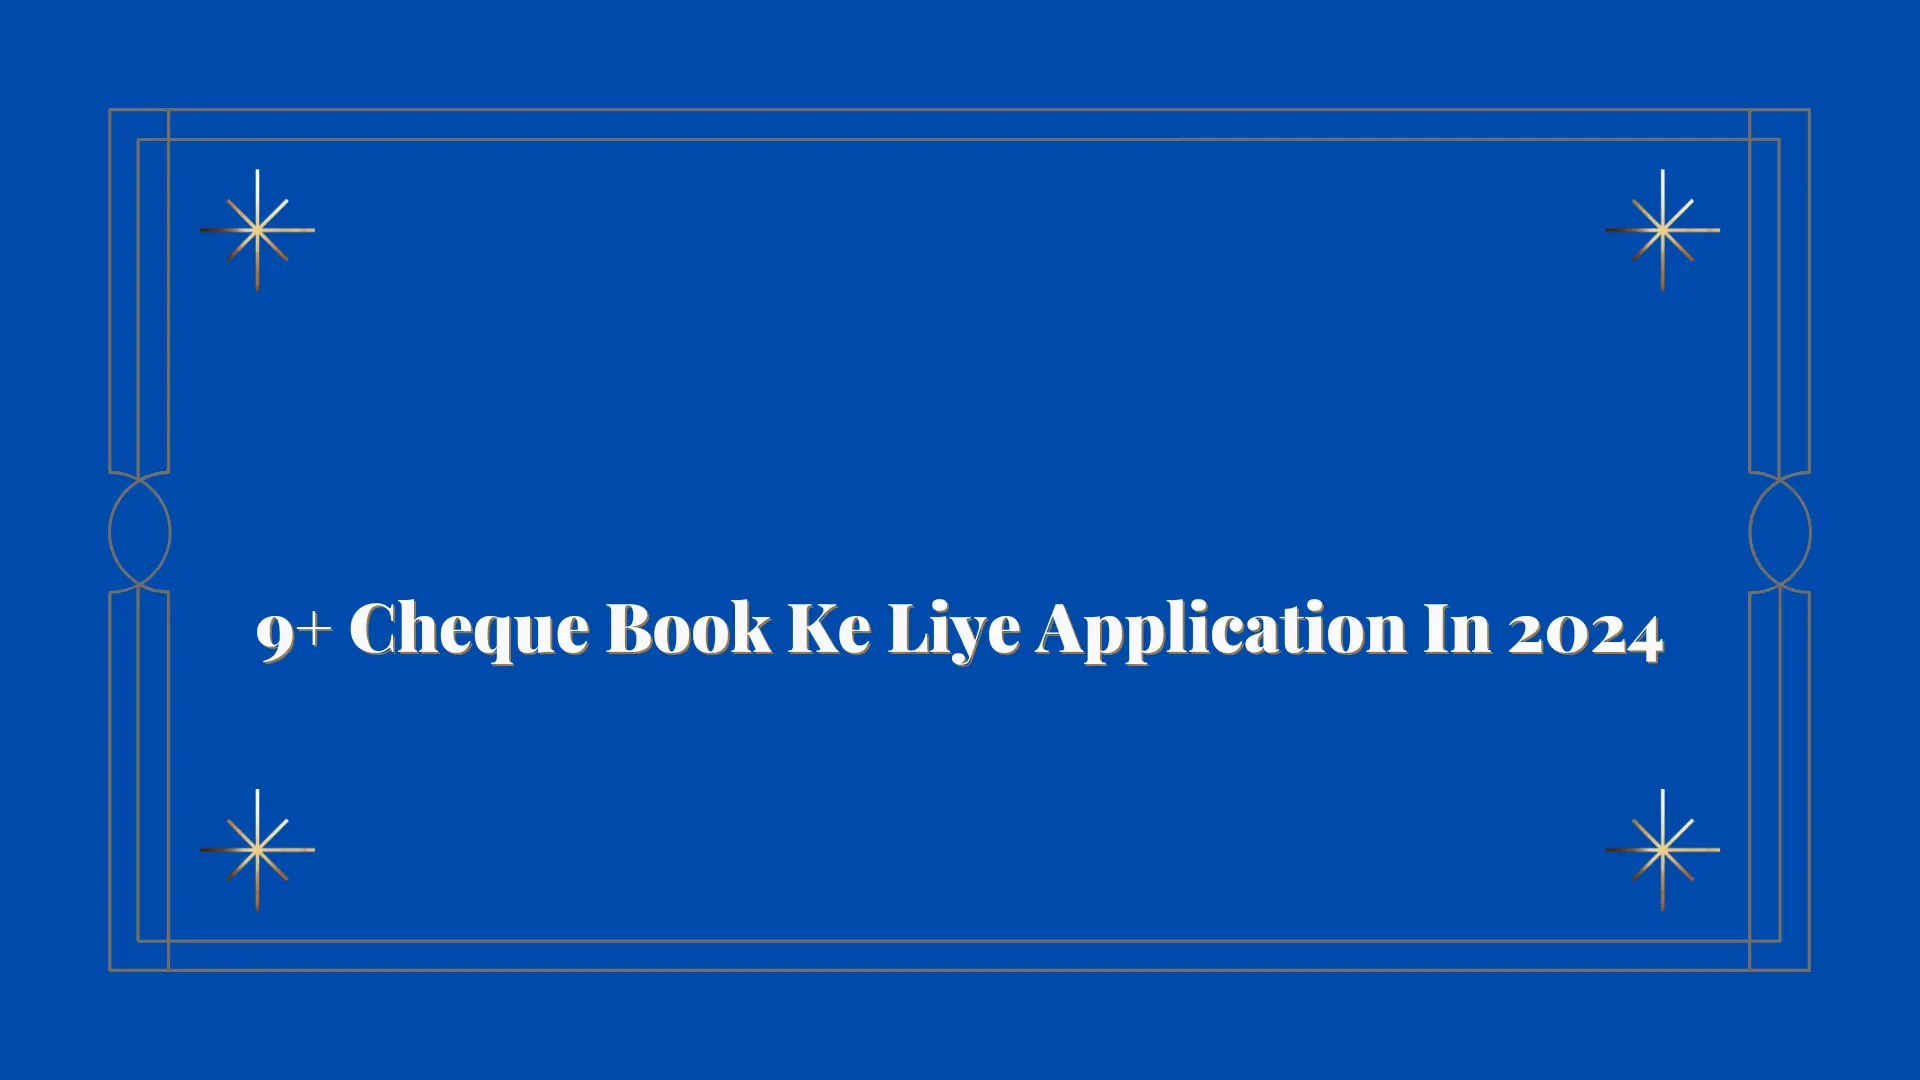 9+ Cheque Book Ke Liye Application